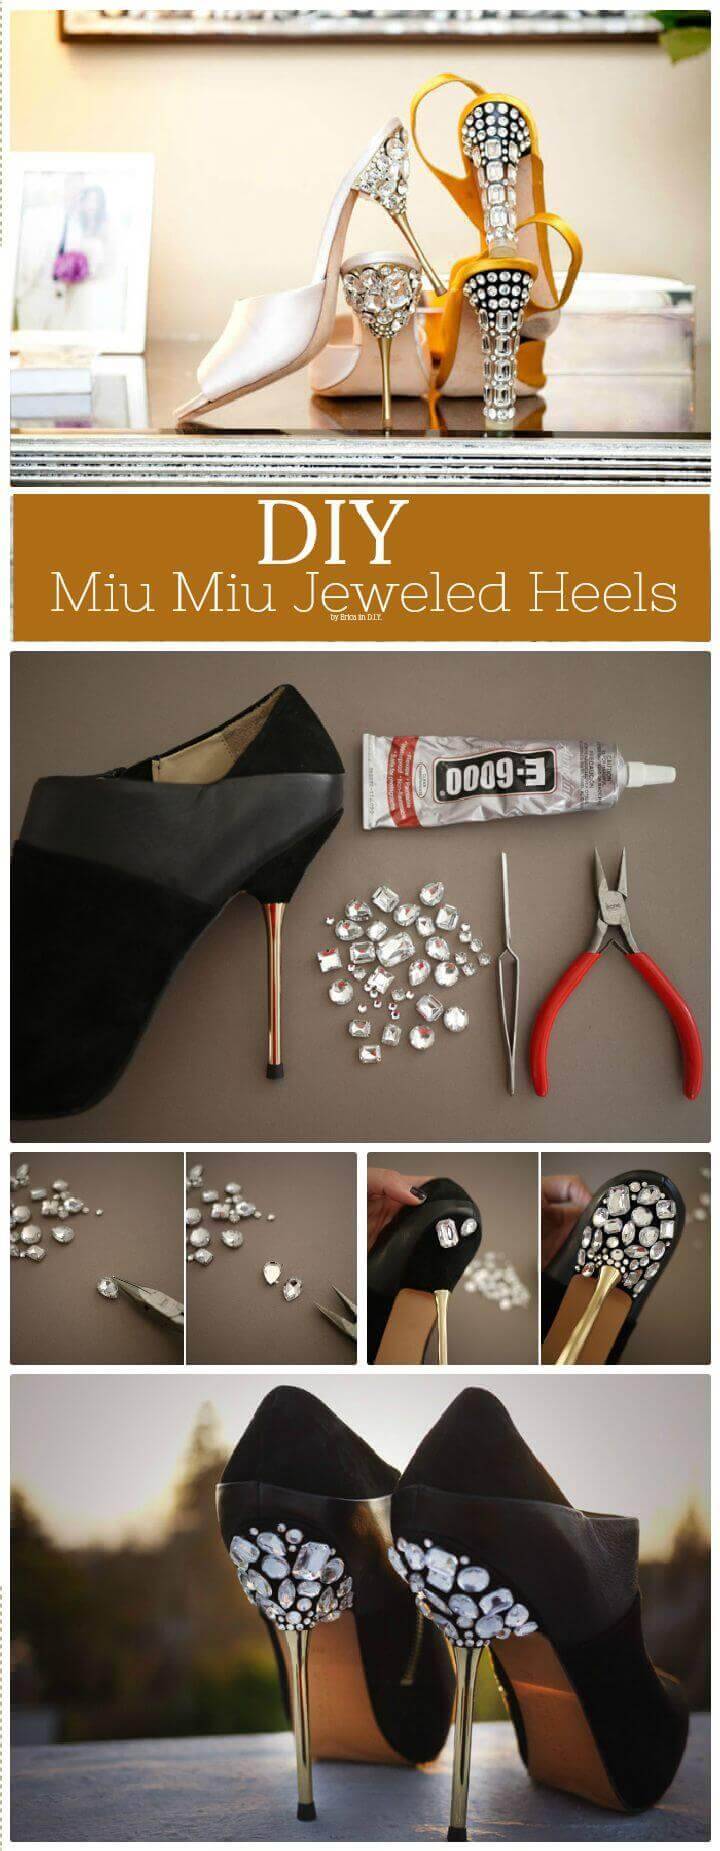 DIY Miu Miu Jeweled Heels